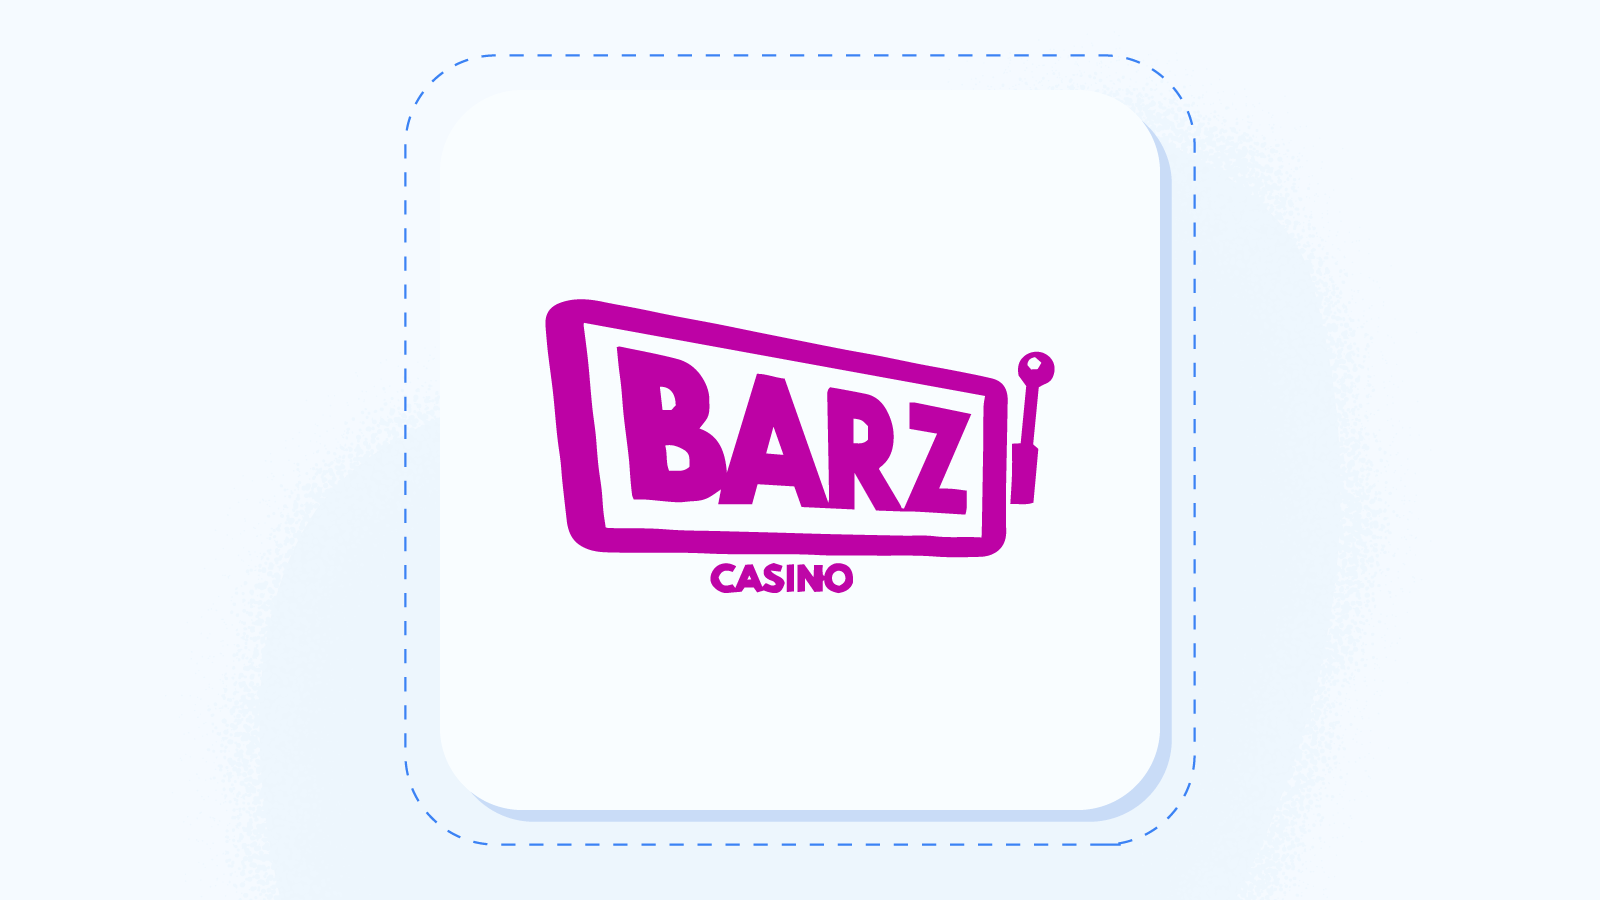 Barz Casino - Online Slots Sites Rating of 4.55